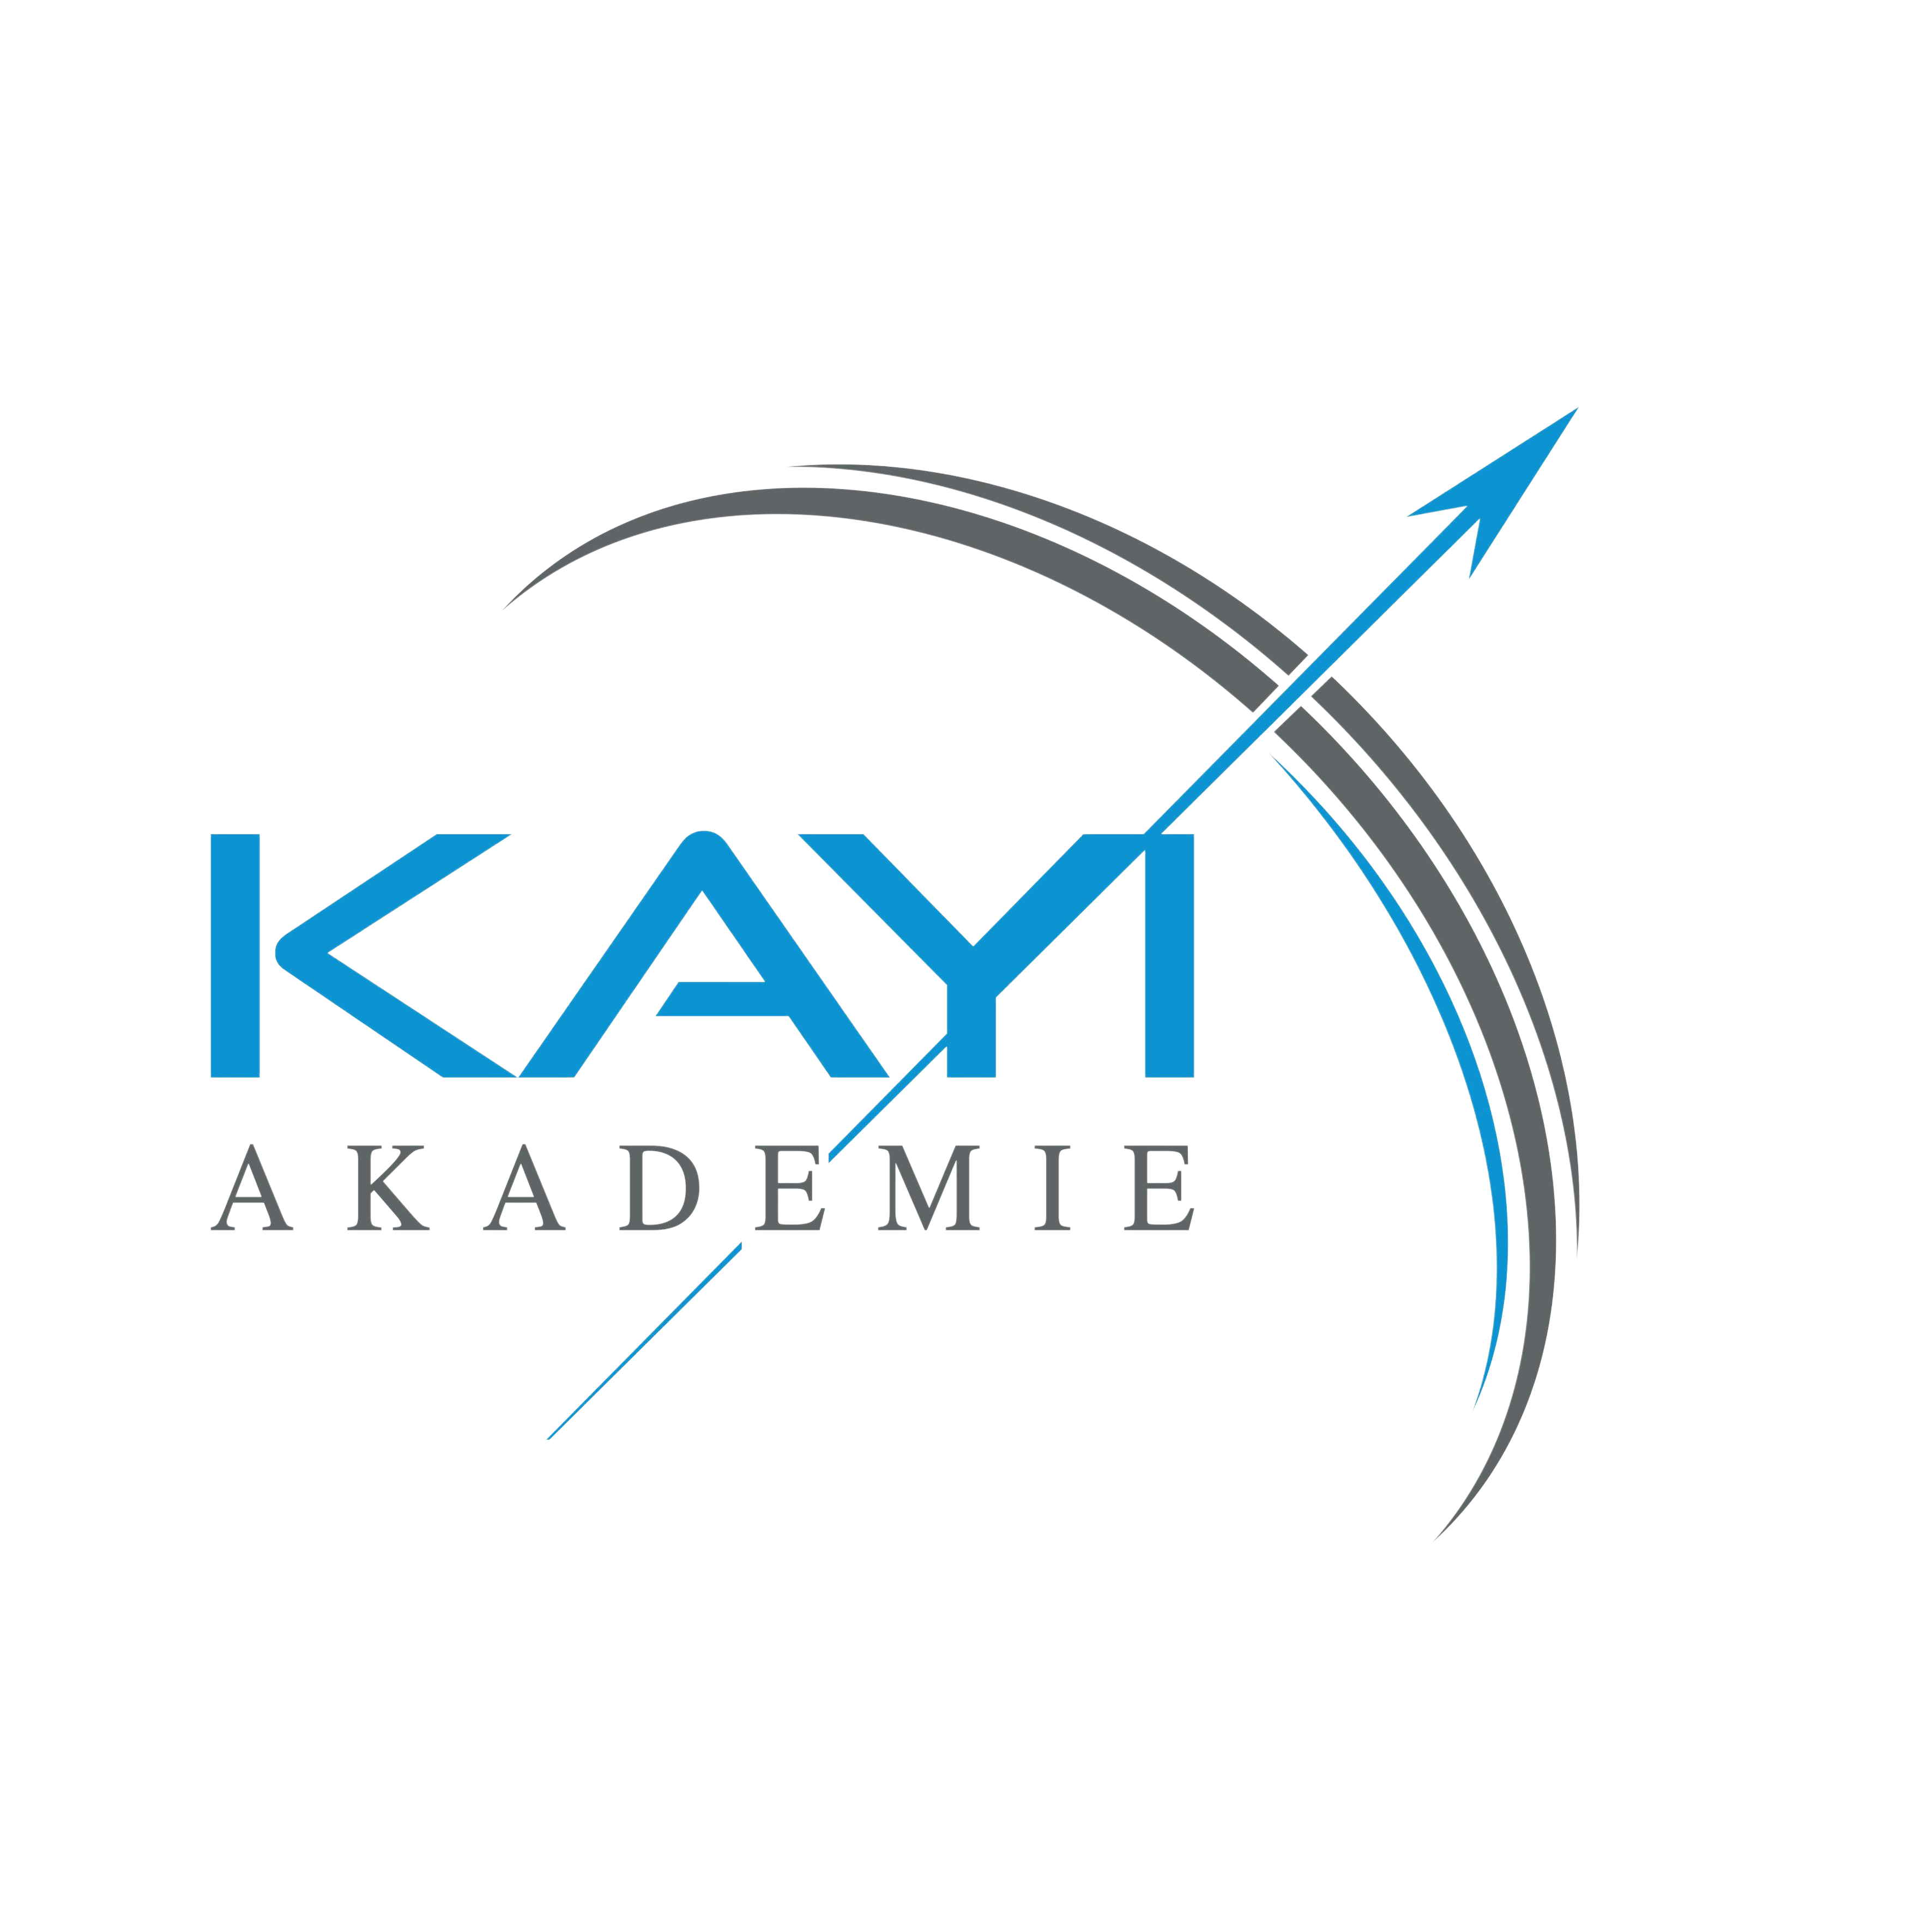 Kayi Akademie